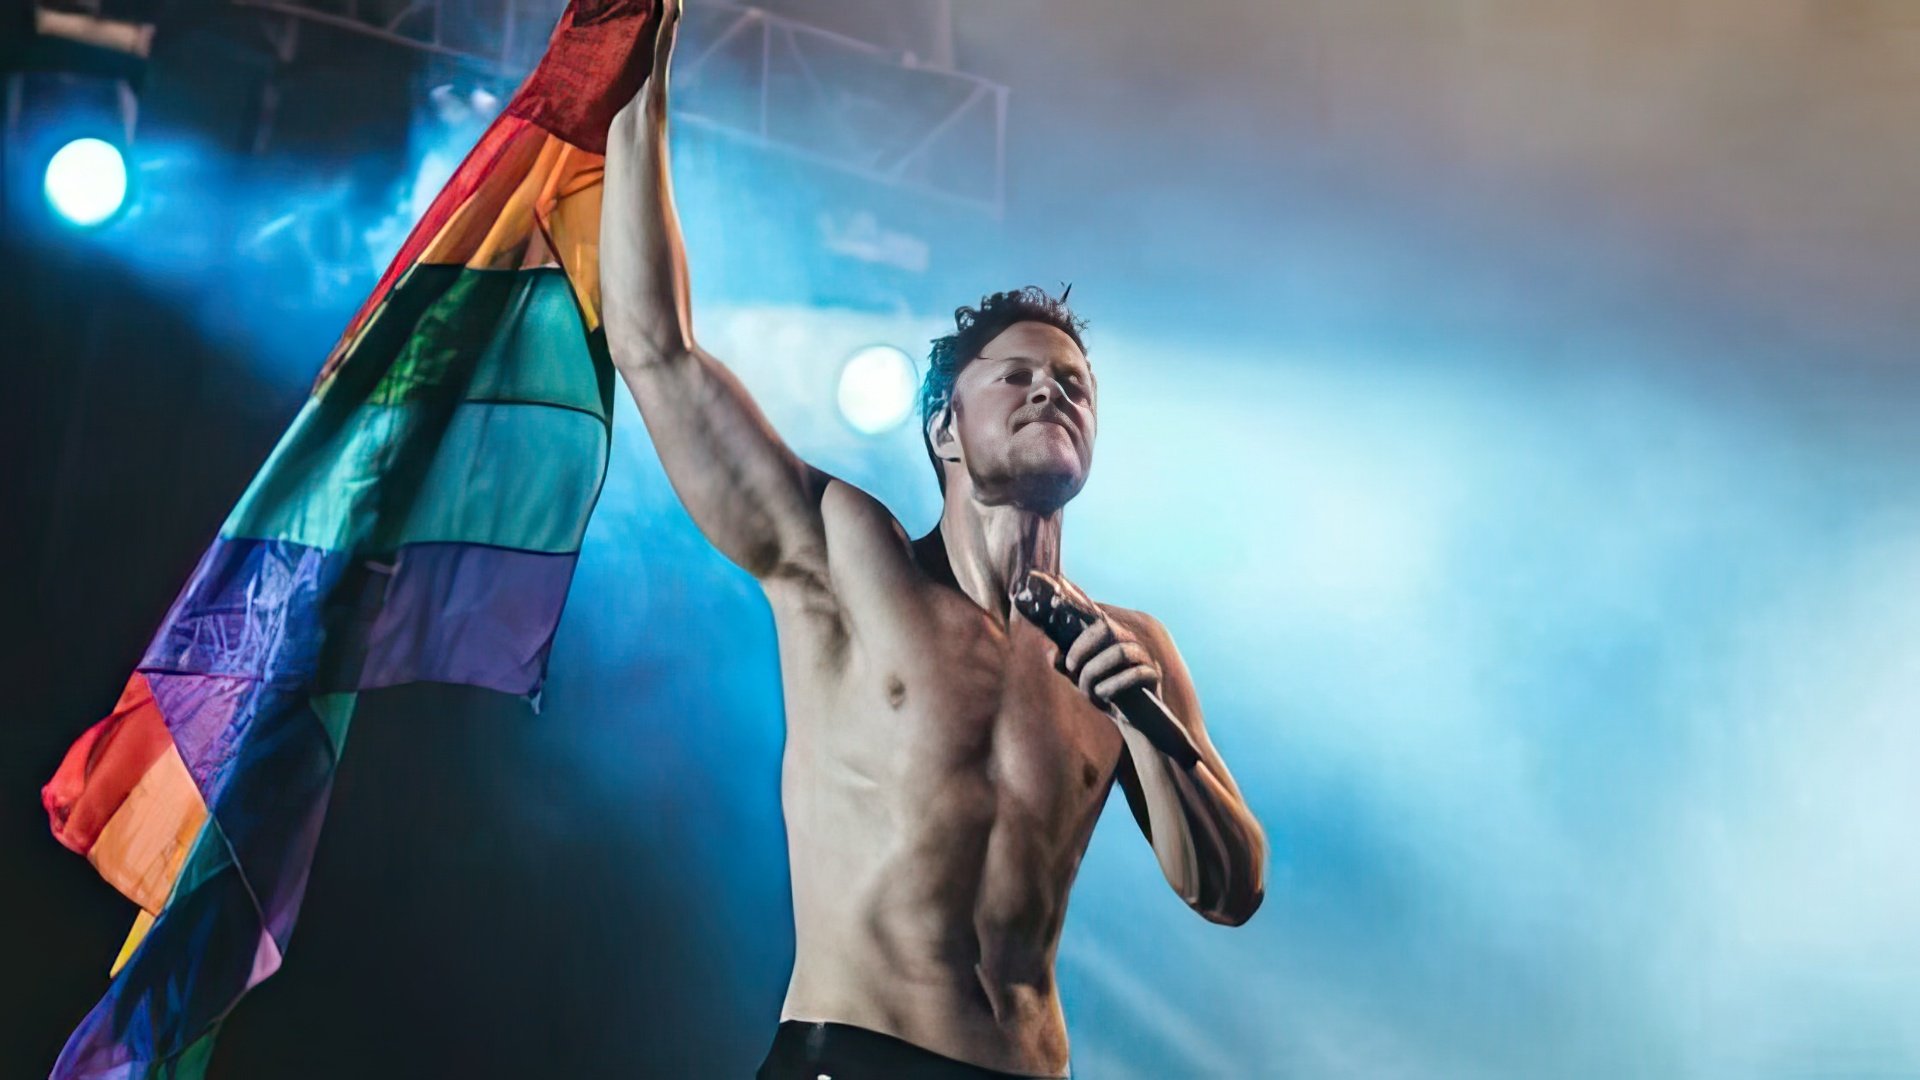 Dan Reynolds Supports the LGBTQ+ Community